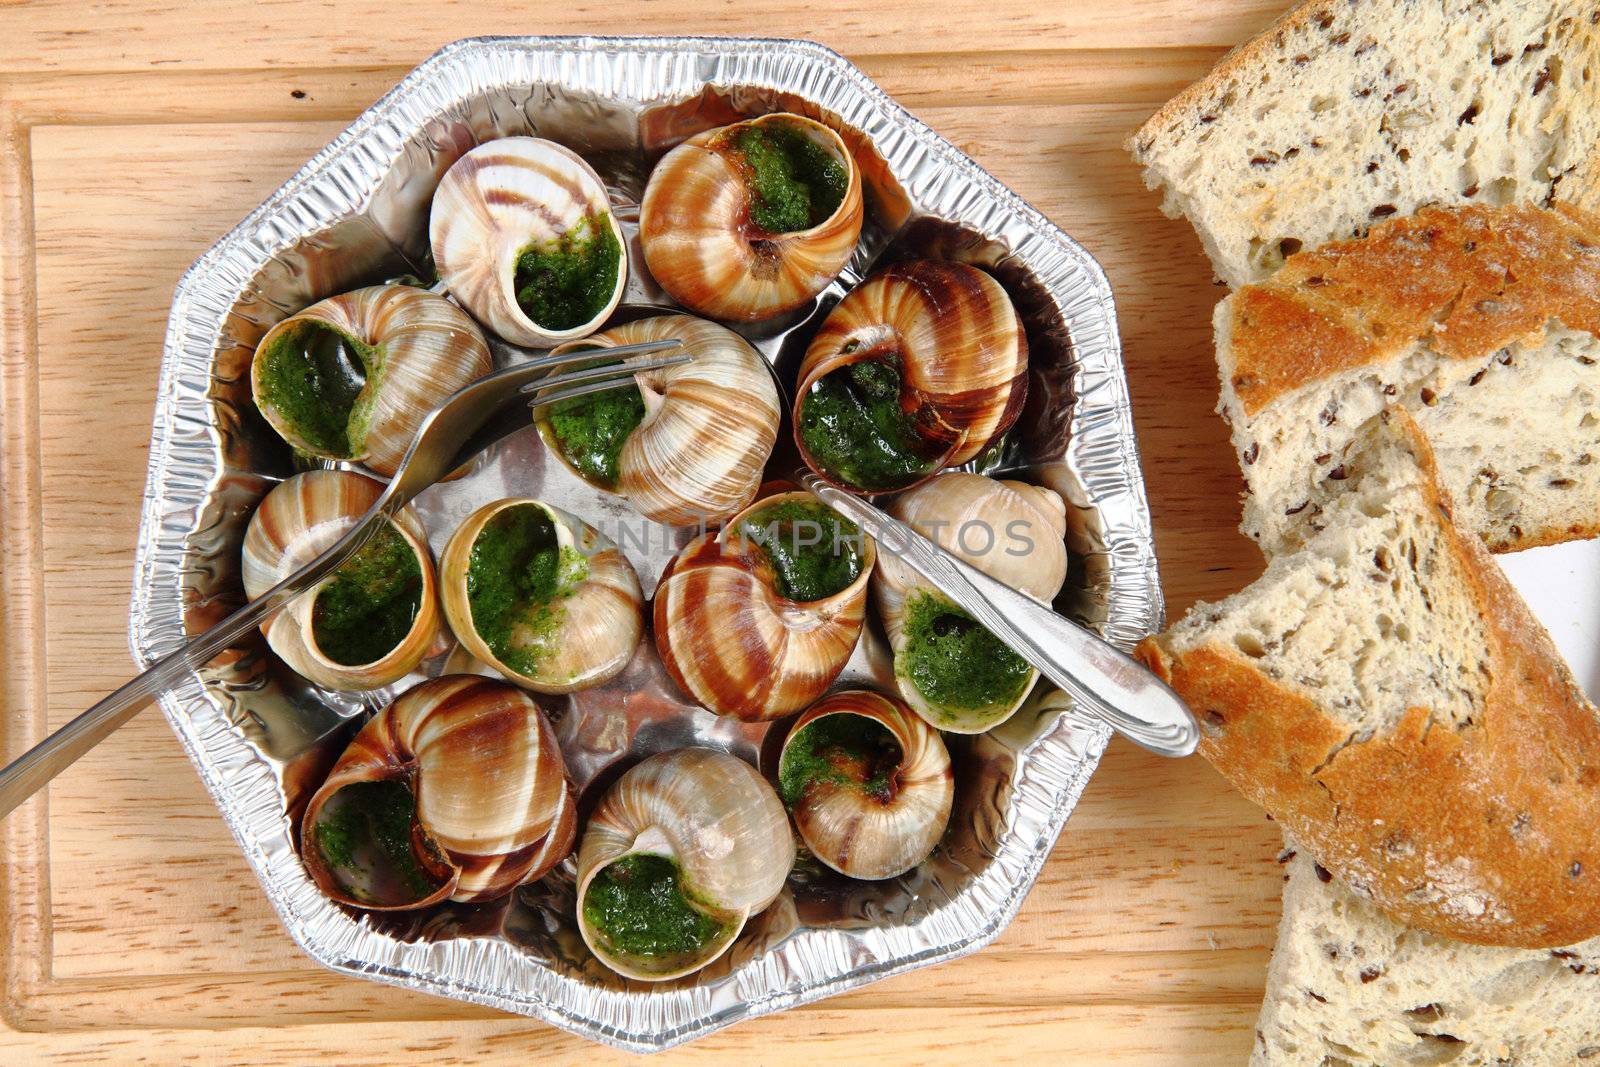 snails - french gourmet food by jonnysek